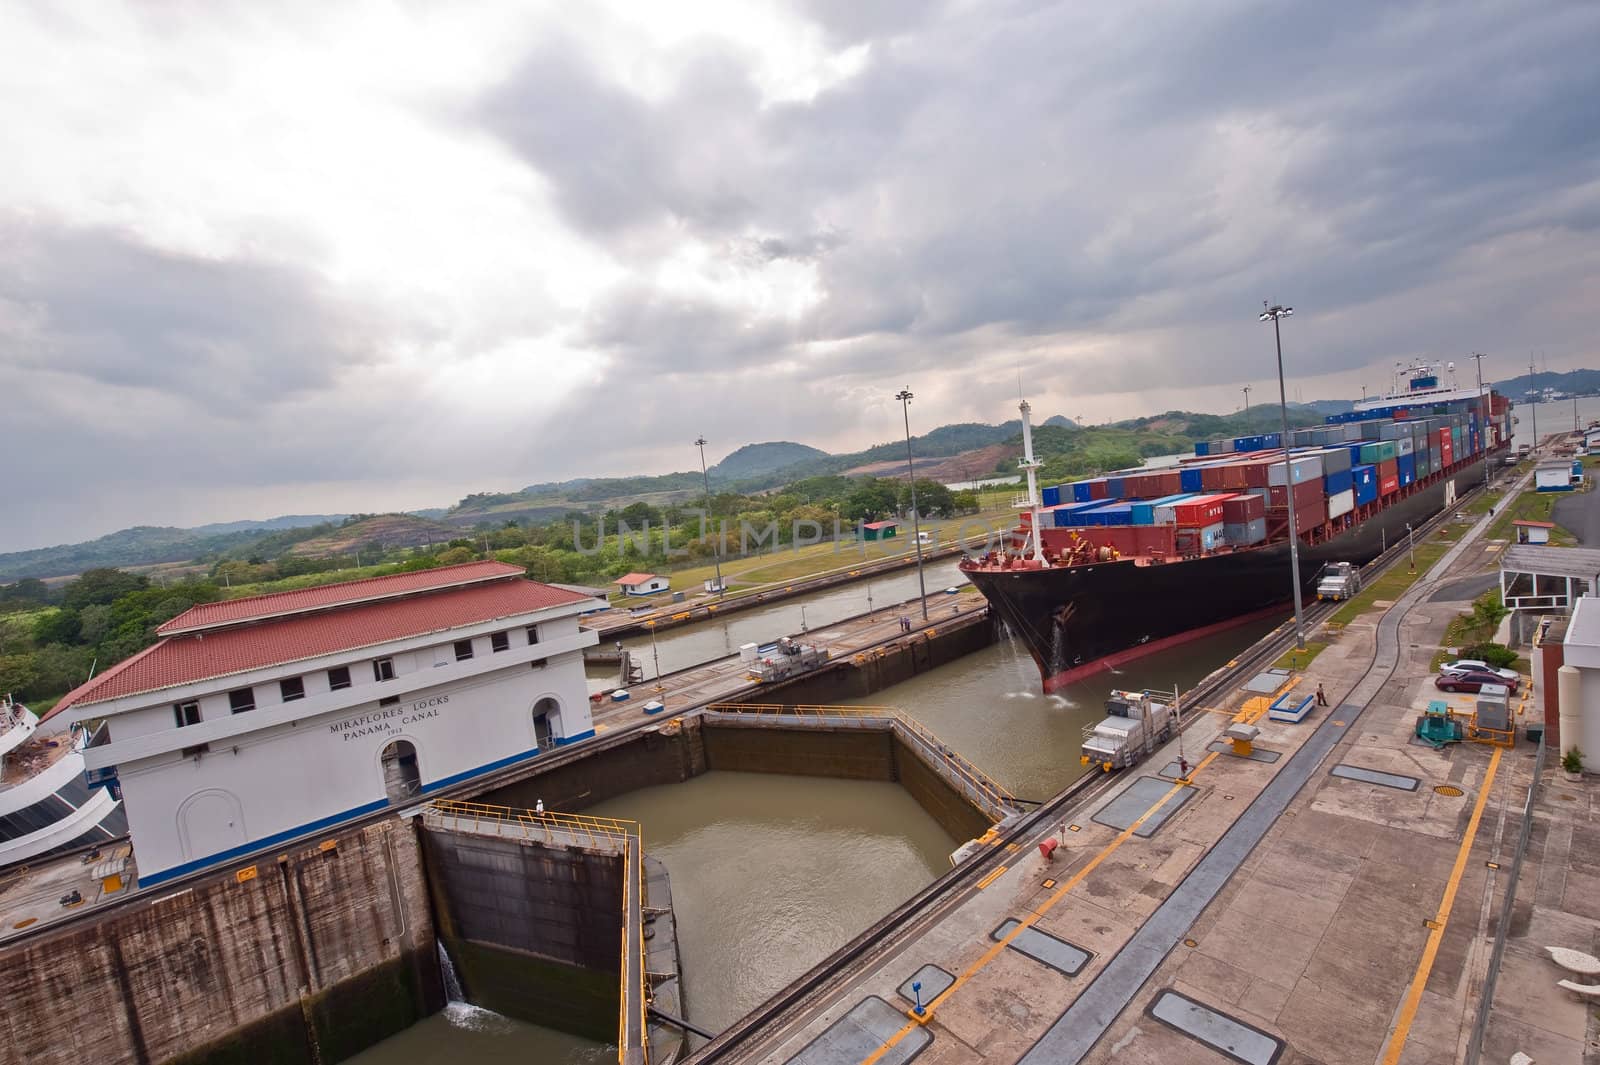 Ship is entering Miraflores locks in Panama canal